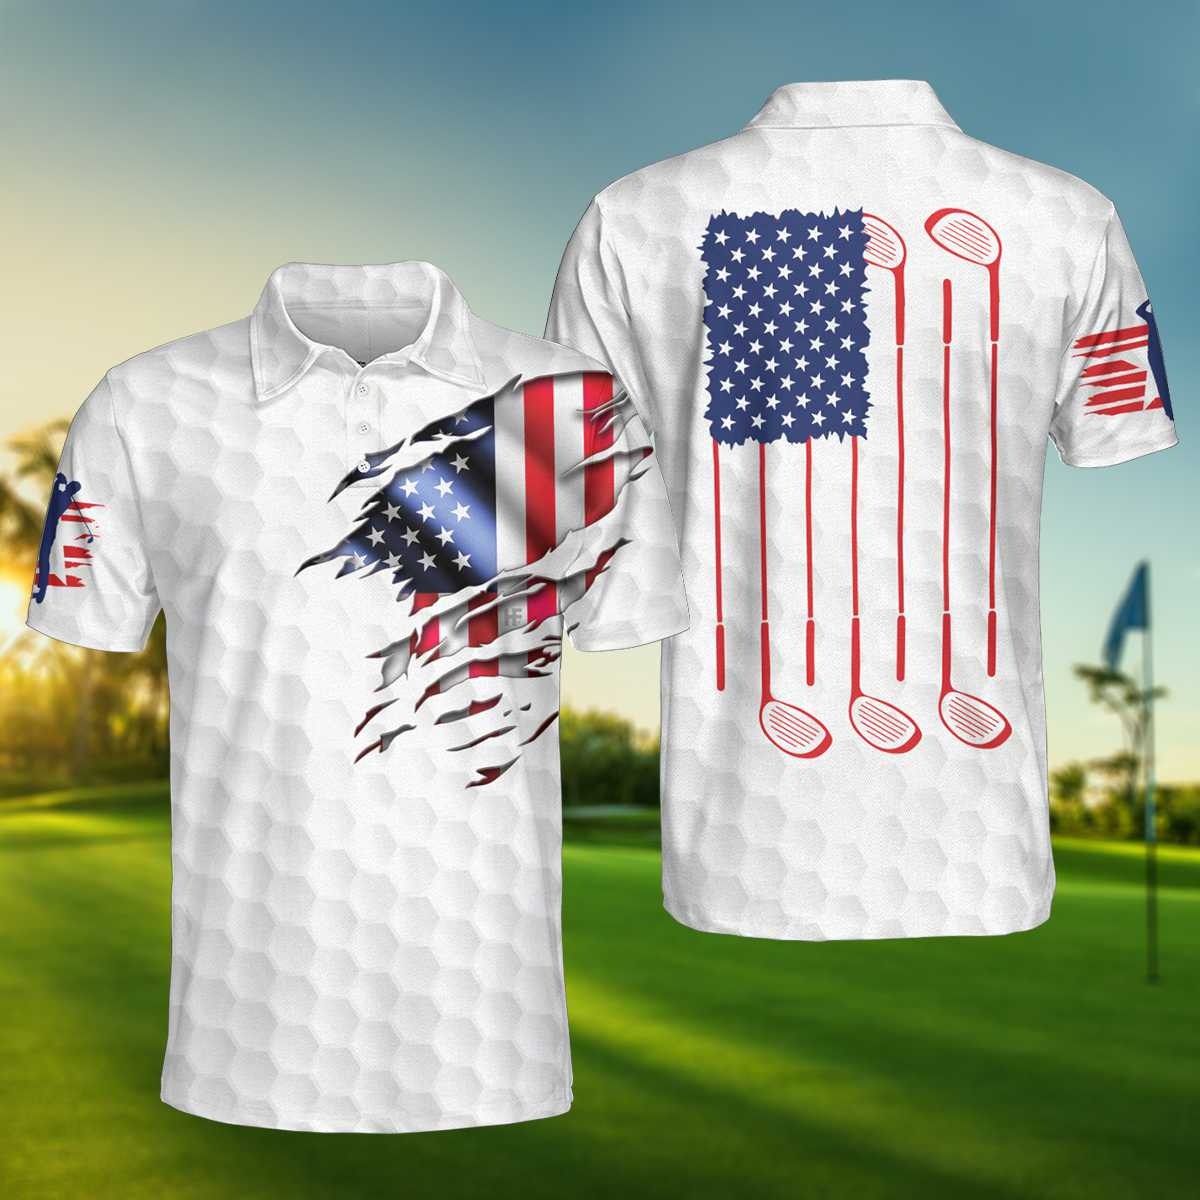 Golf American flag polo shirt2 1